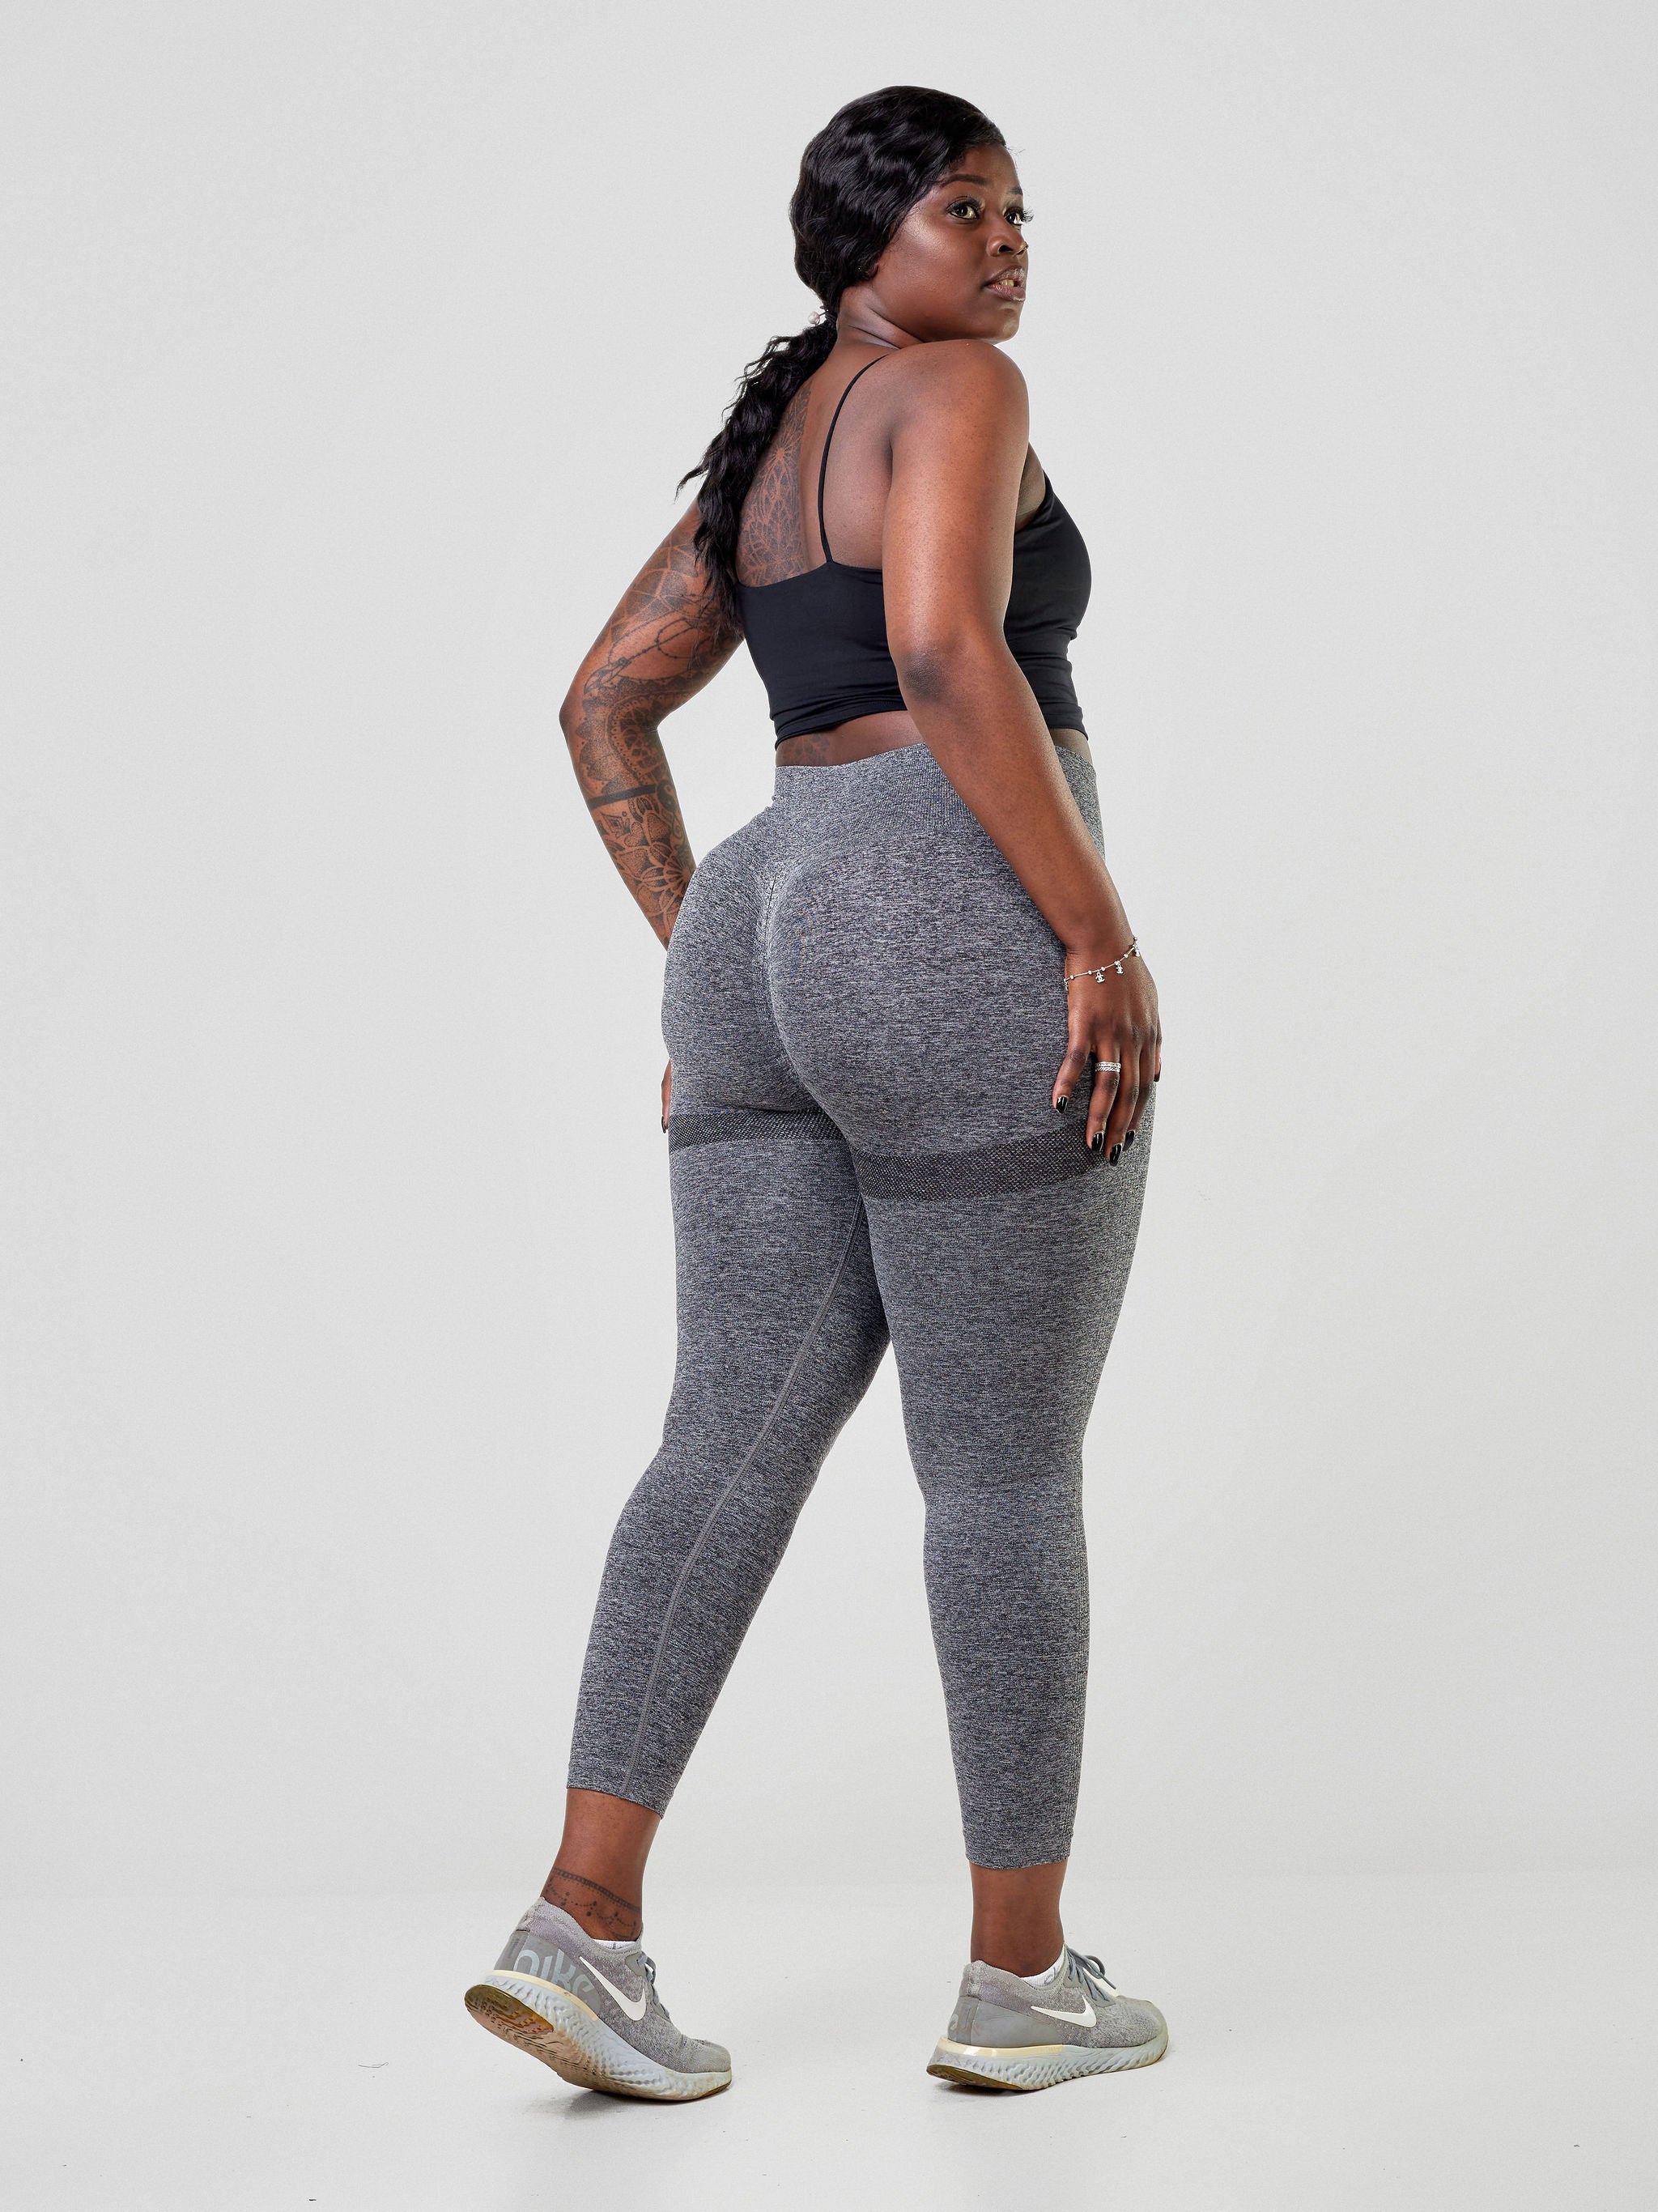 Ava Fitness Stay Active Leggings - Dark Grey